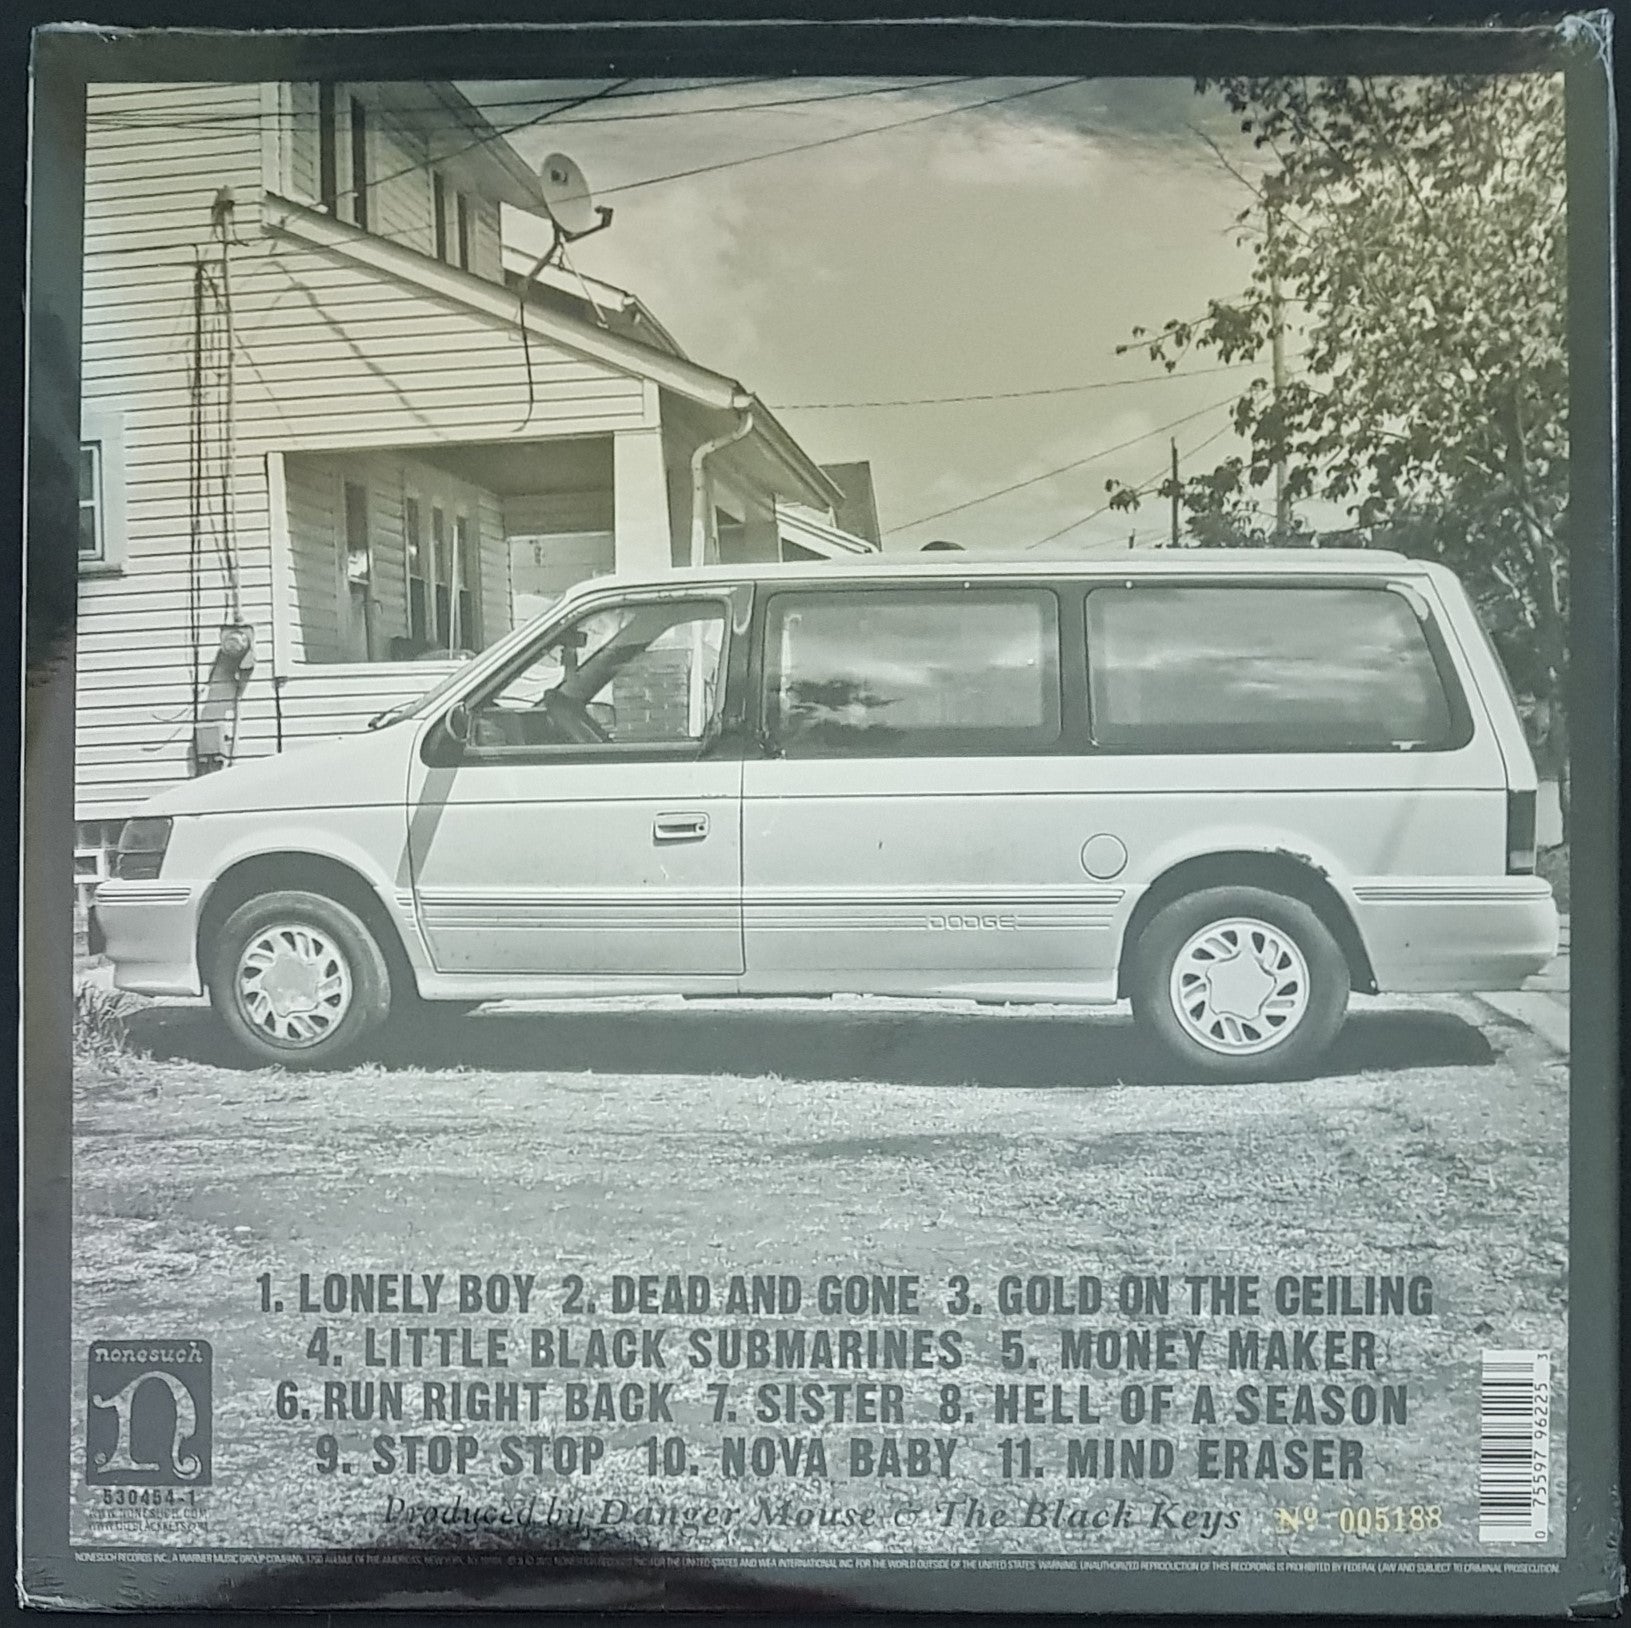 The Black Keys - El Camino LP - 180g Audiphile (Special Edition) NEW